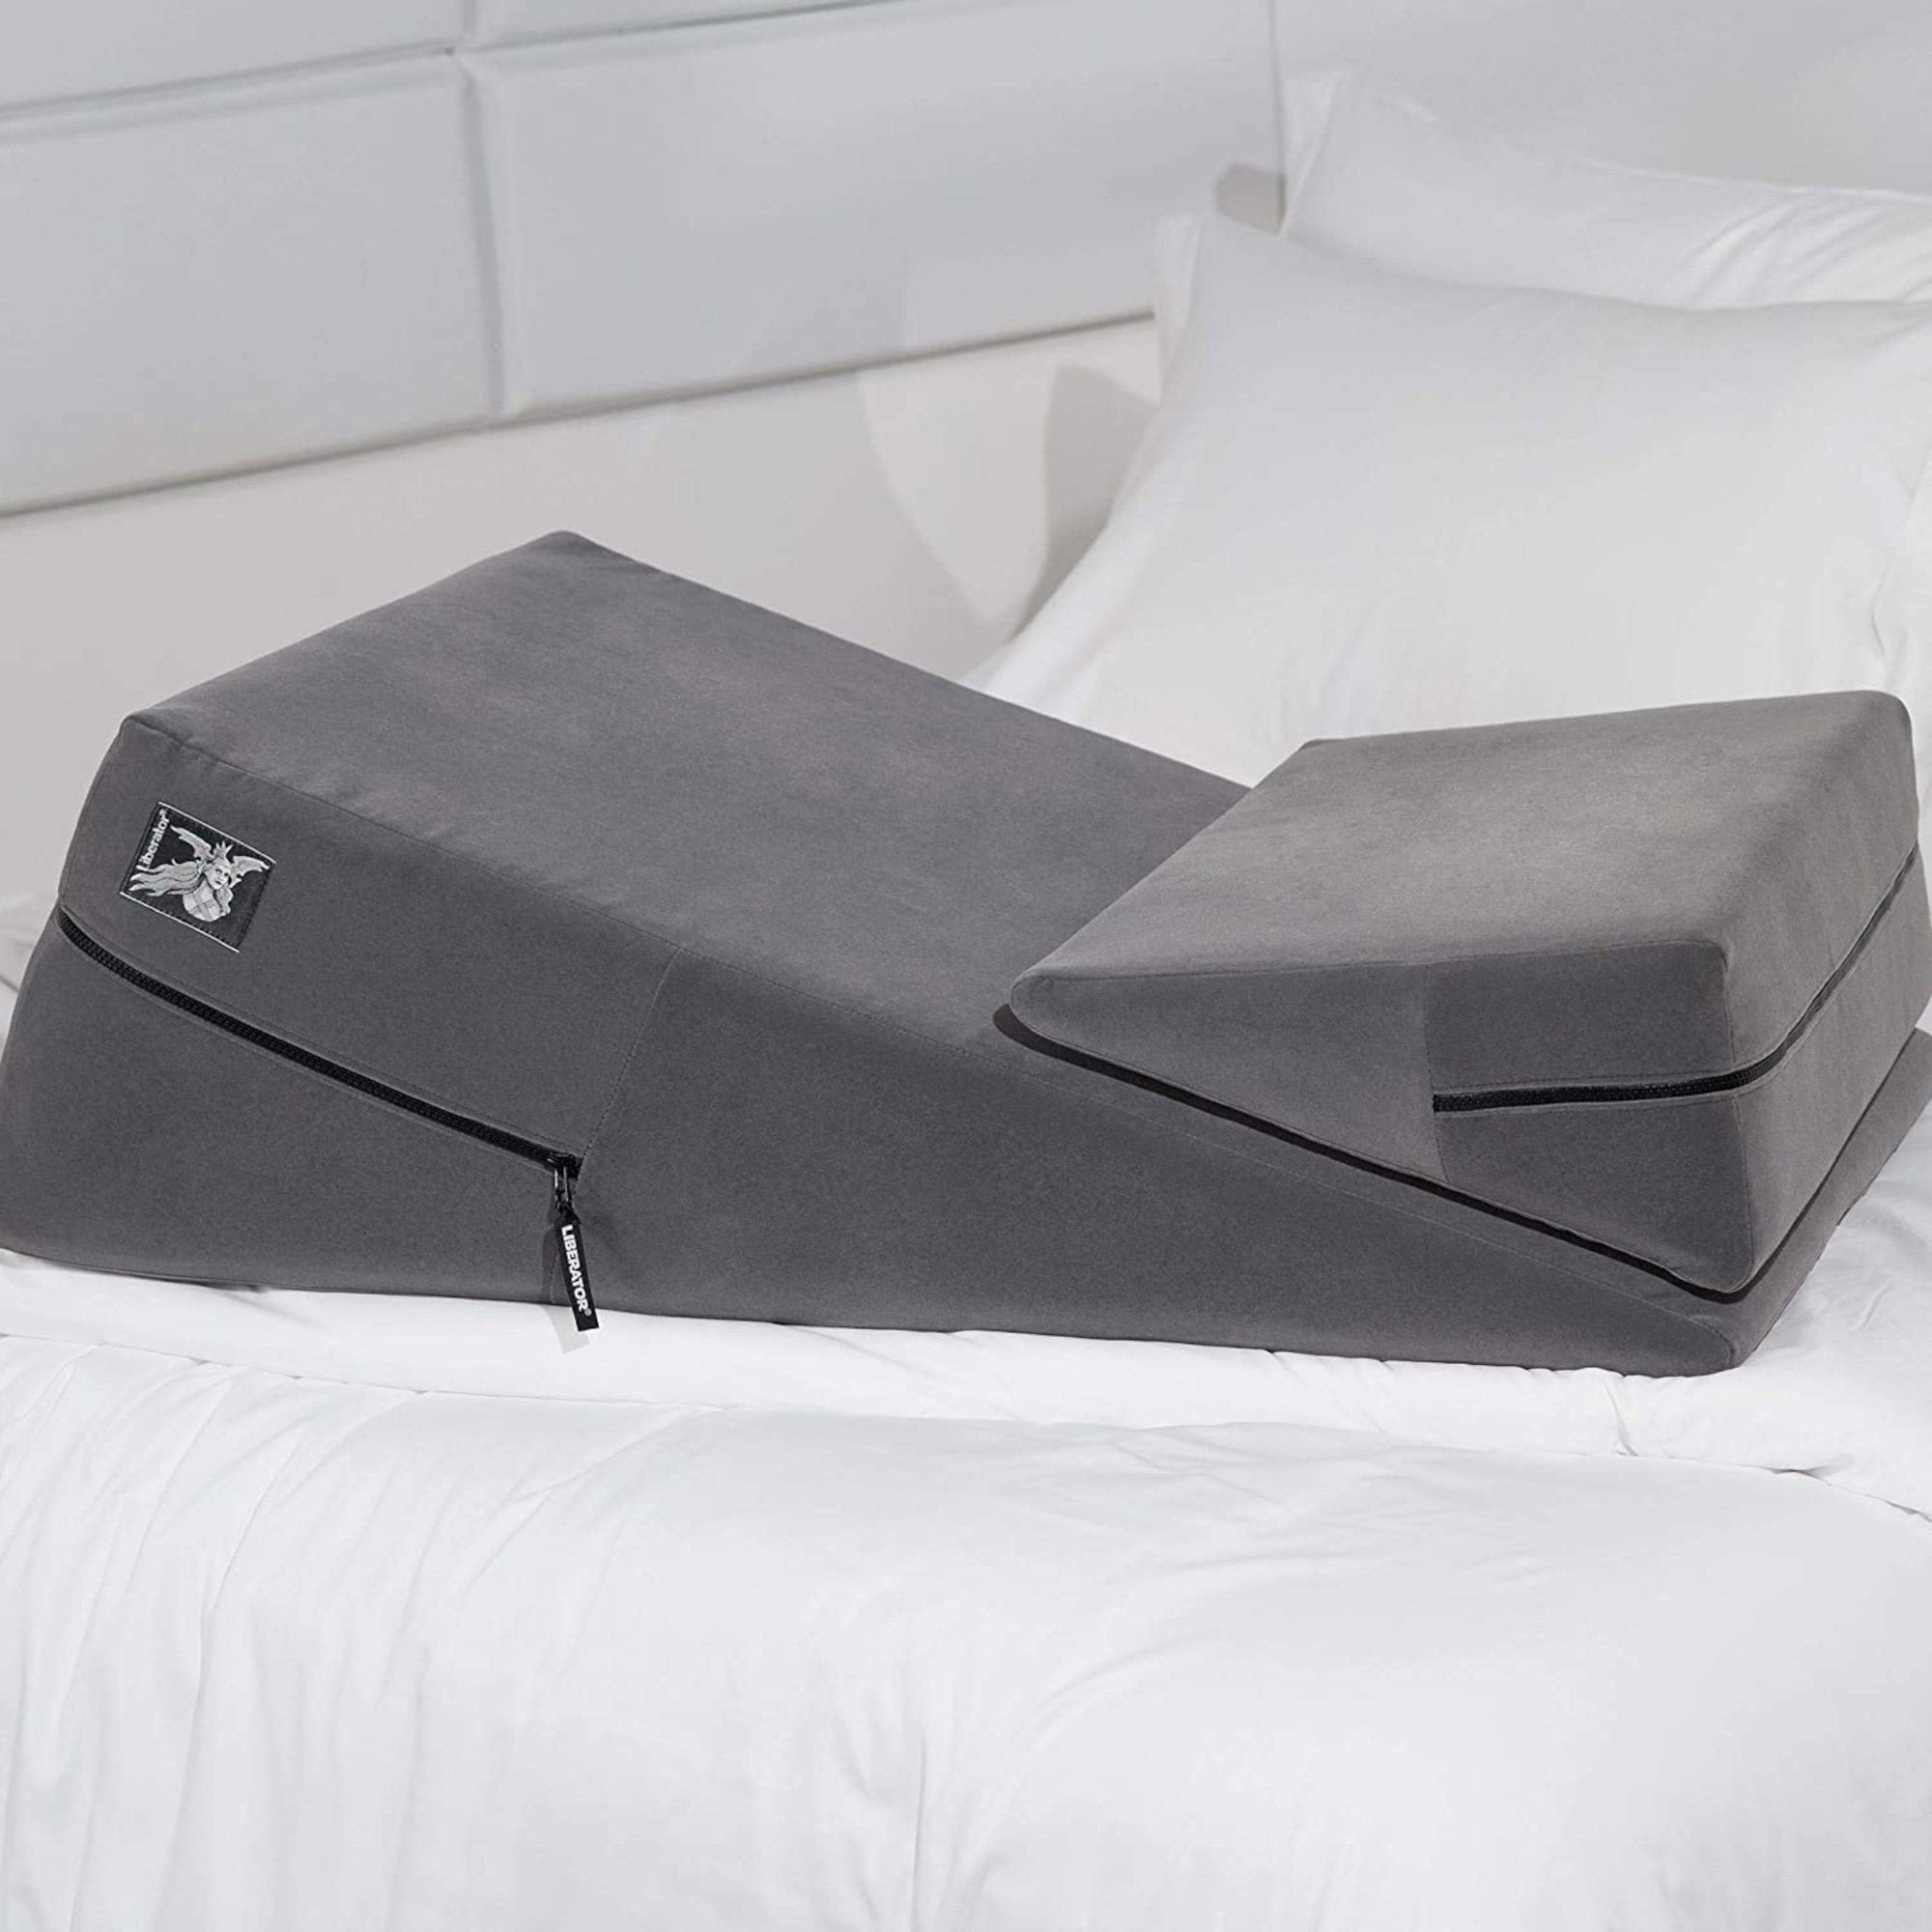 Liberator Wedge Ramp Combo Intimate Positioning Pillows Original Size Brookstone 9683